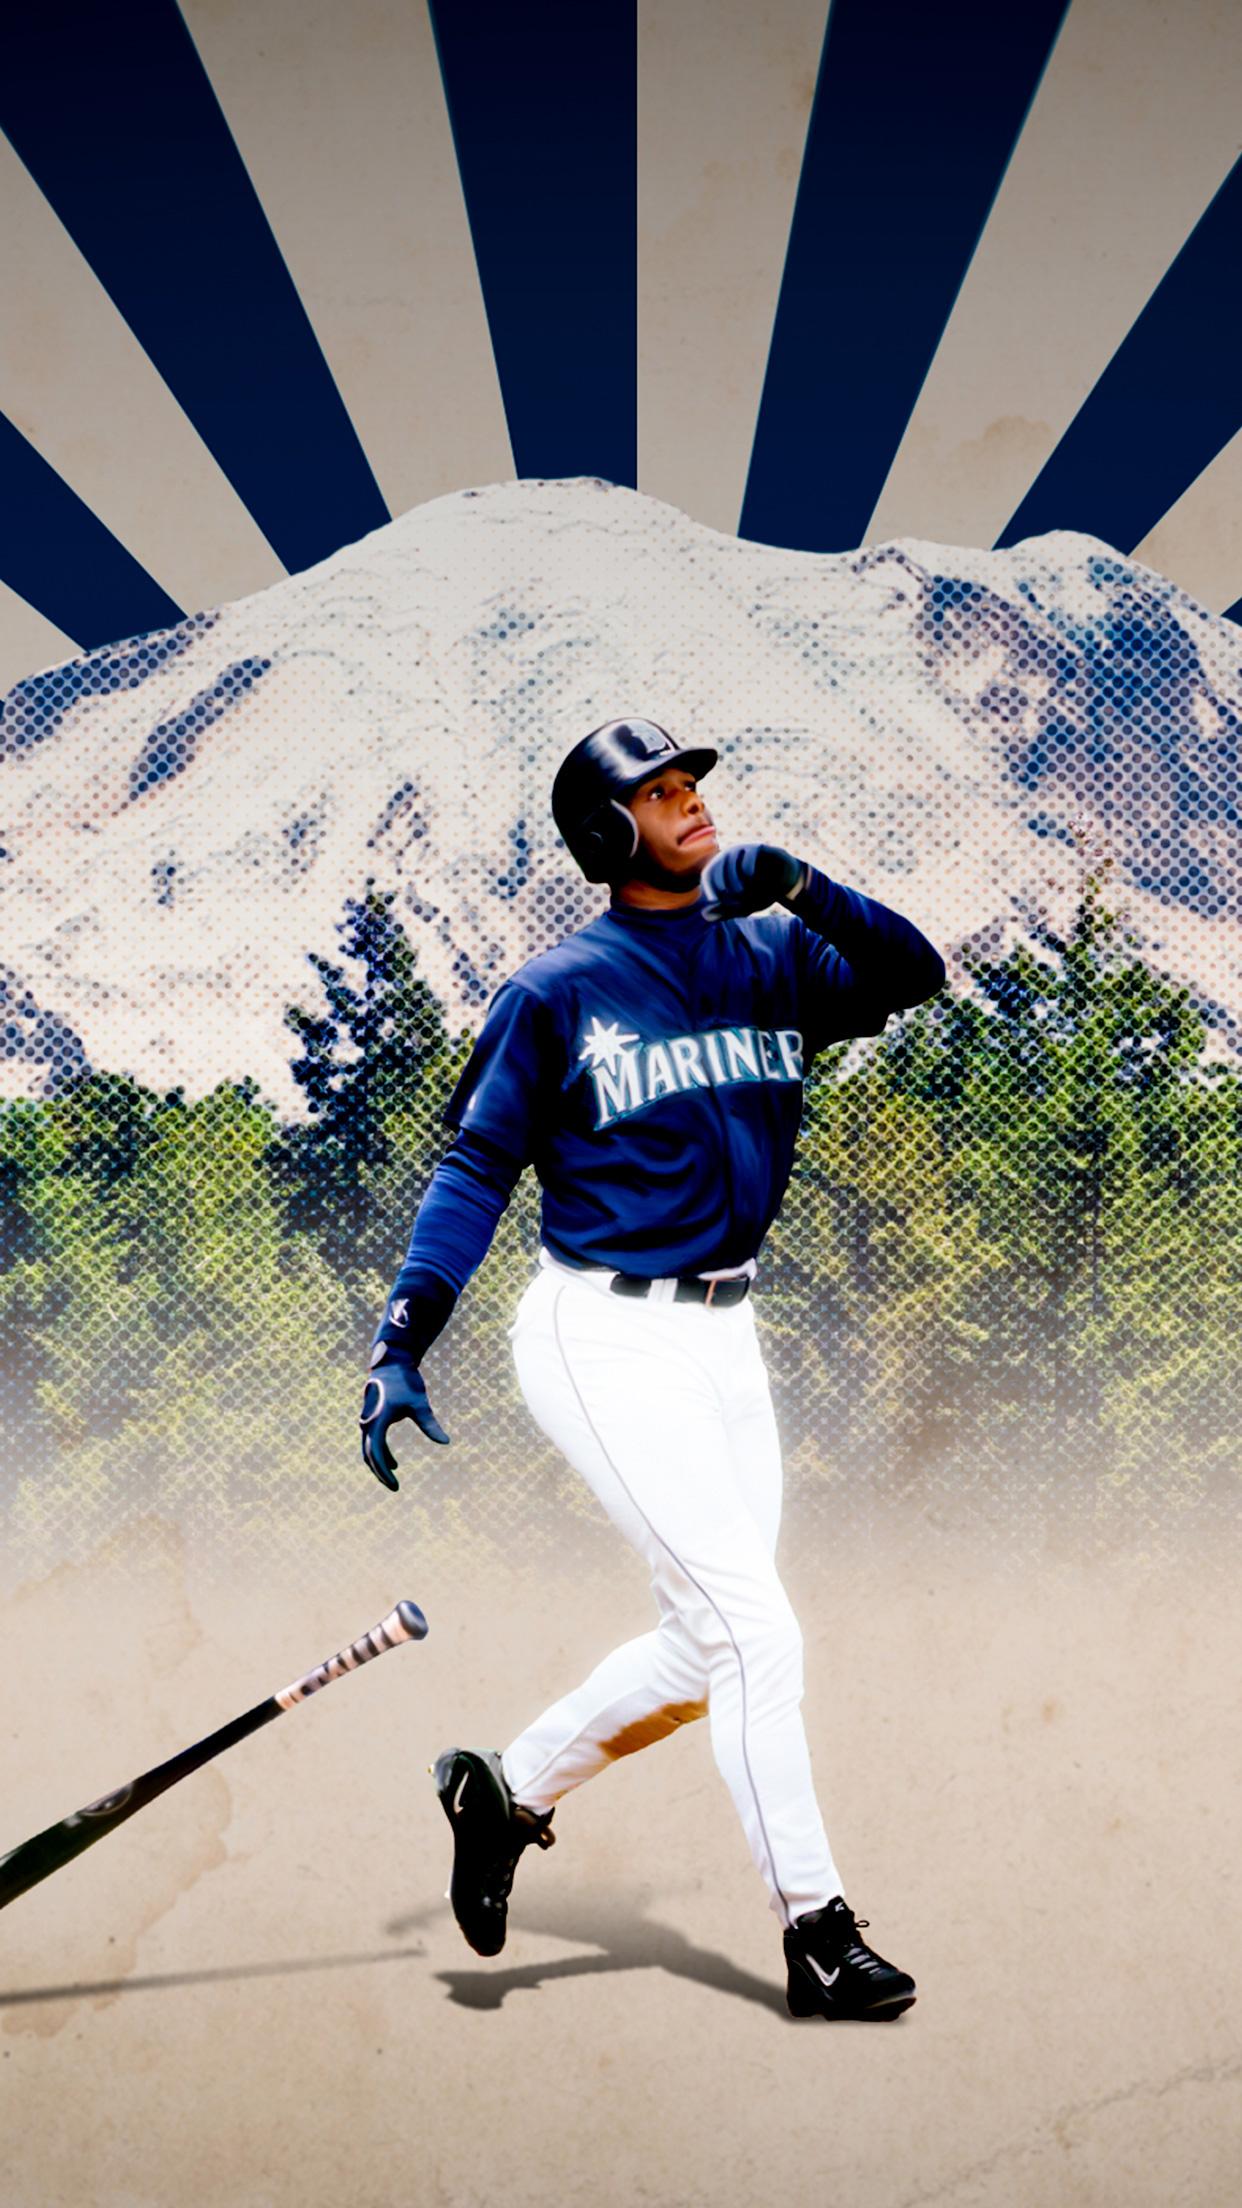 Wallpaper wallpaper, sport, logo, baseball, Seattle Mariners images for  desktop, section спорт - download